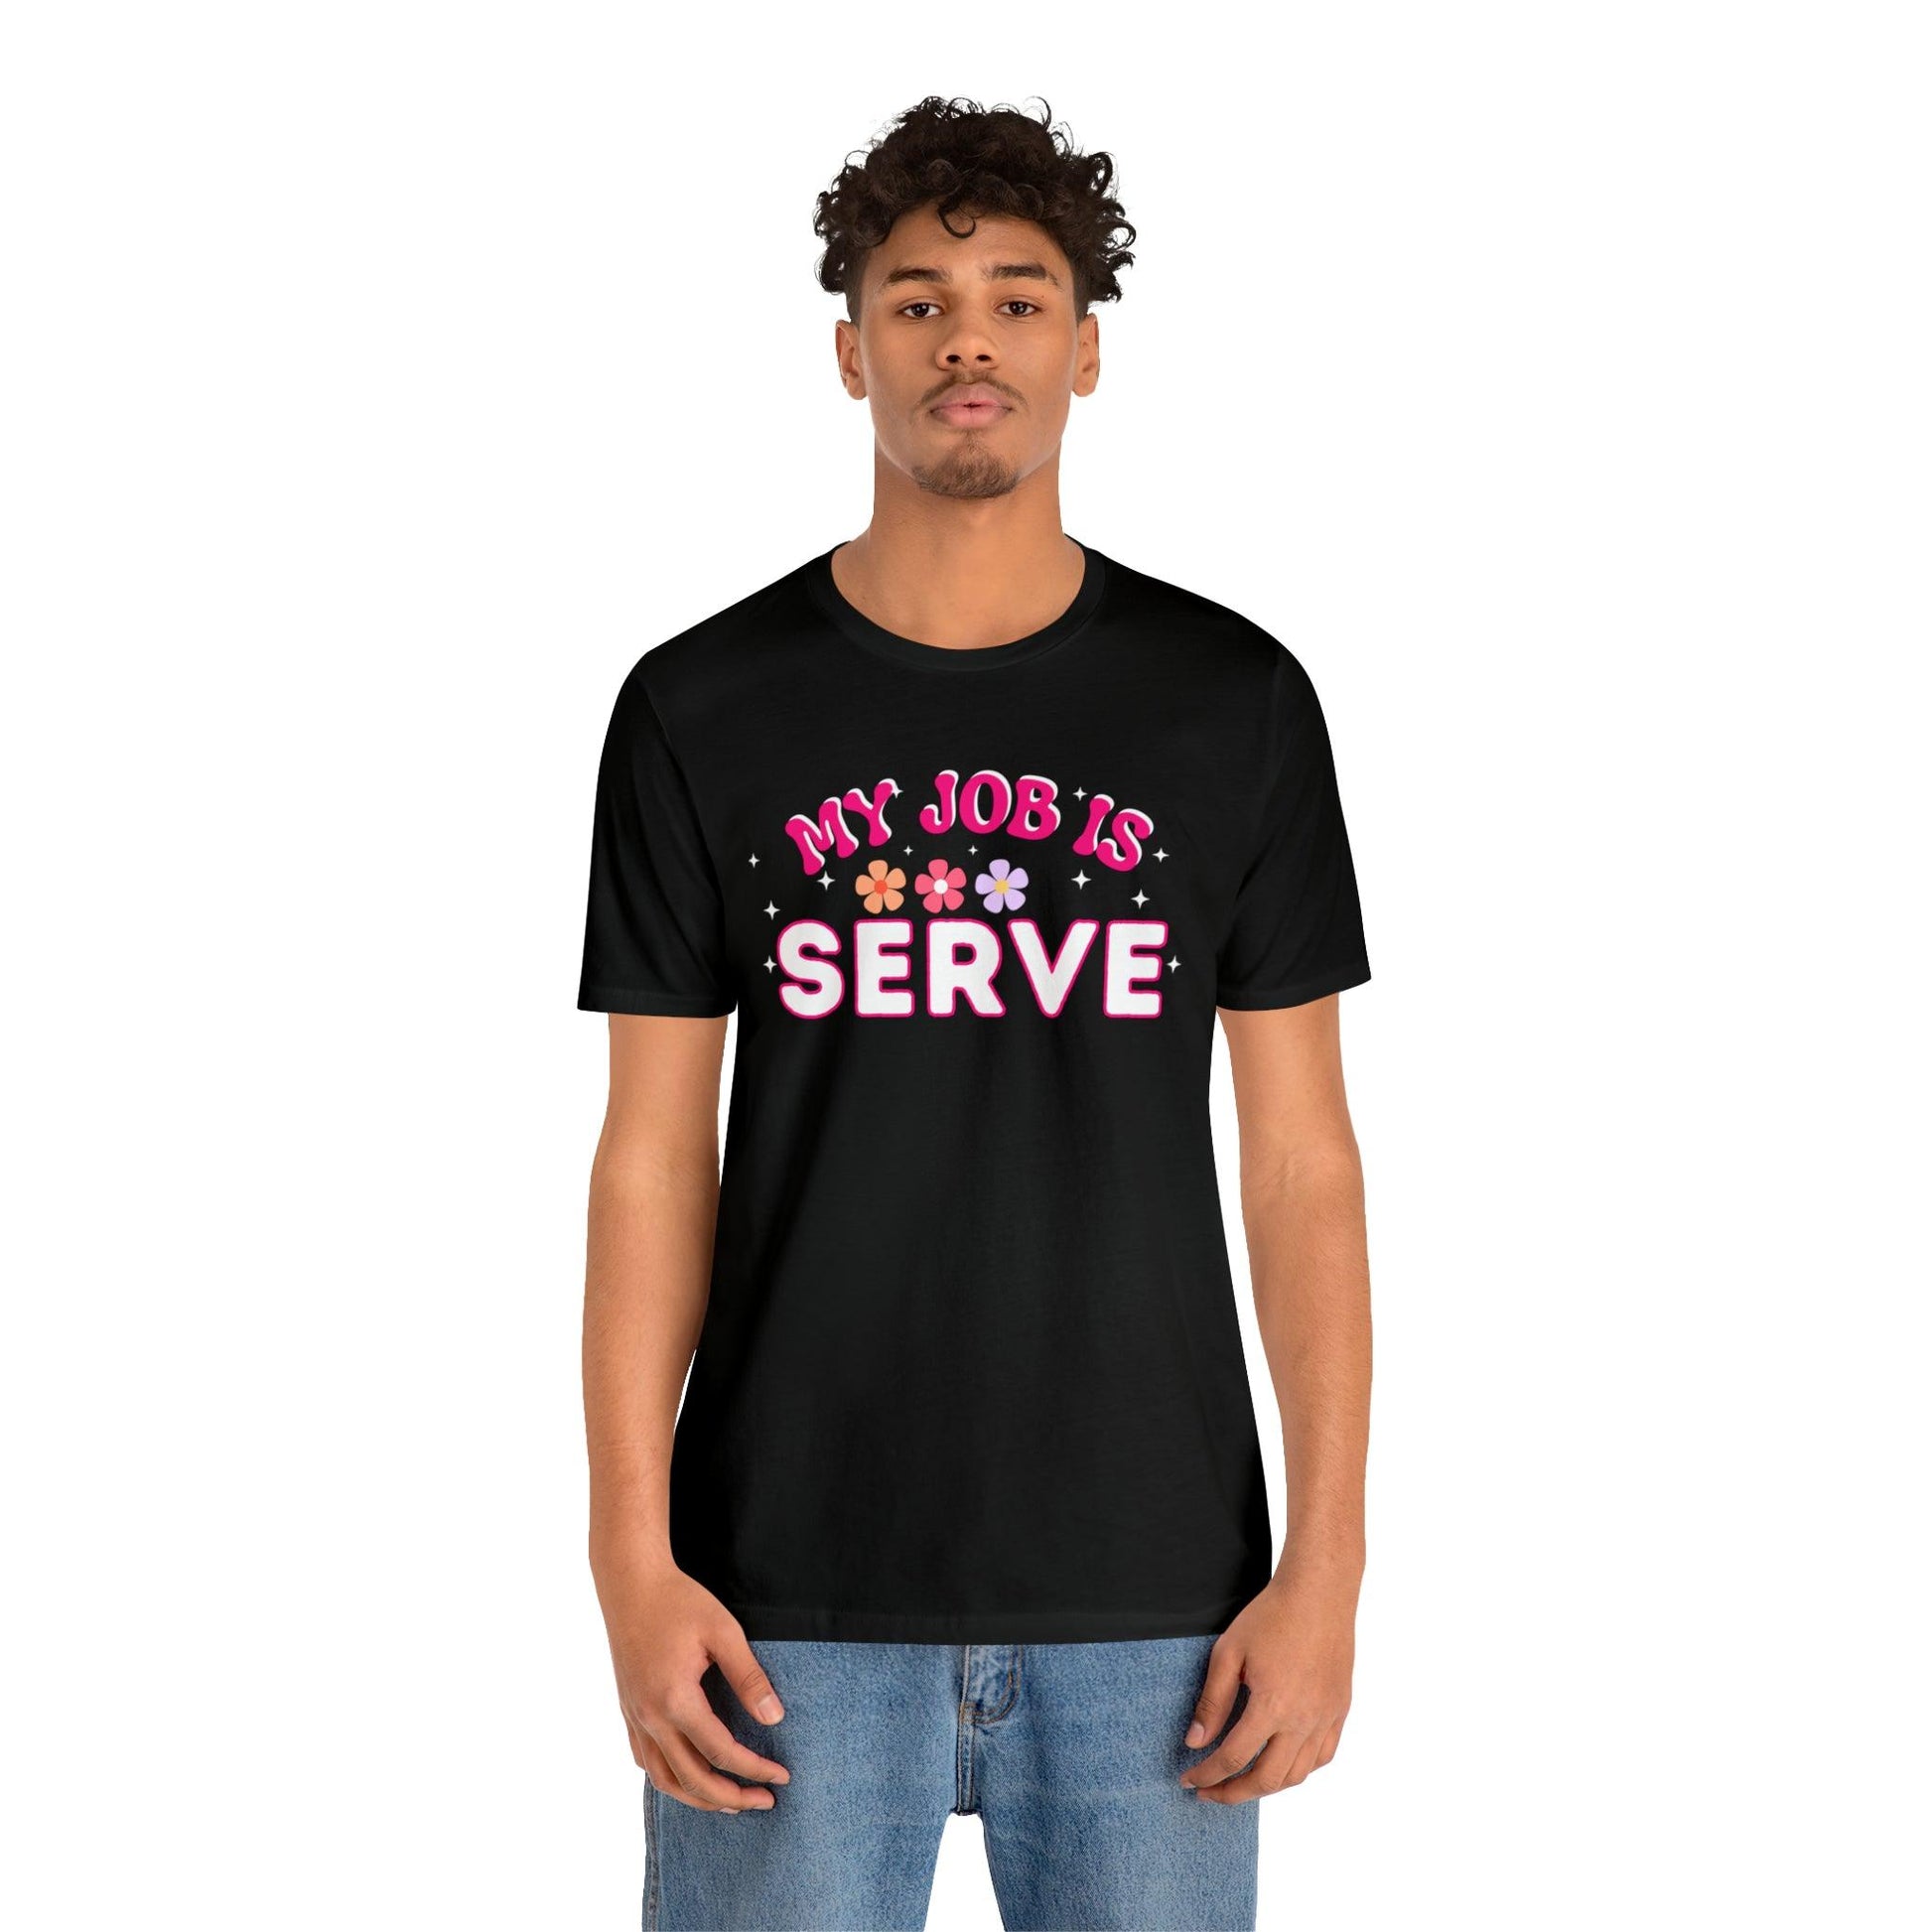 My Job is Serve Shirt for Military Customer Service Waiter/Waitress Public Servant, Hotel Concierge, Caterer, Flight Attendant, Bartender Barista - Giftsmojo